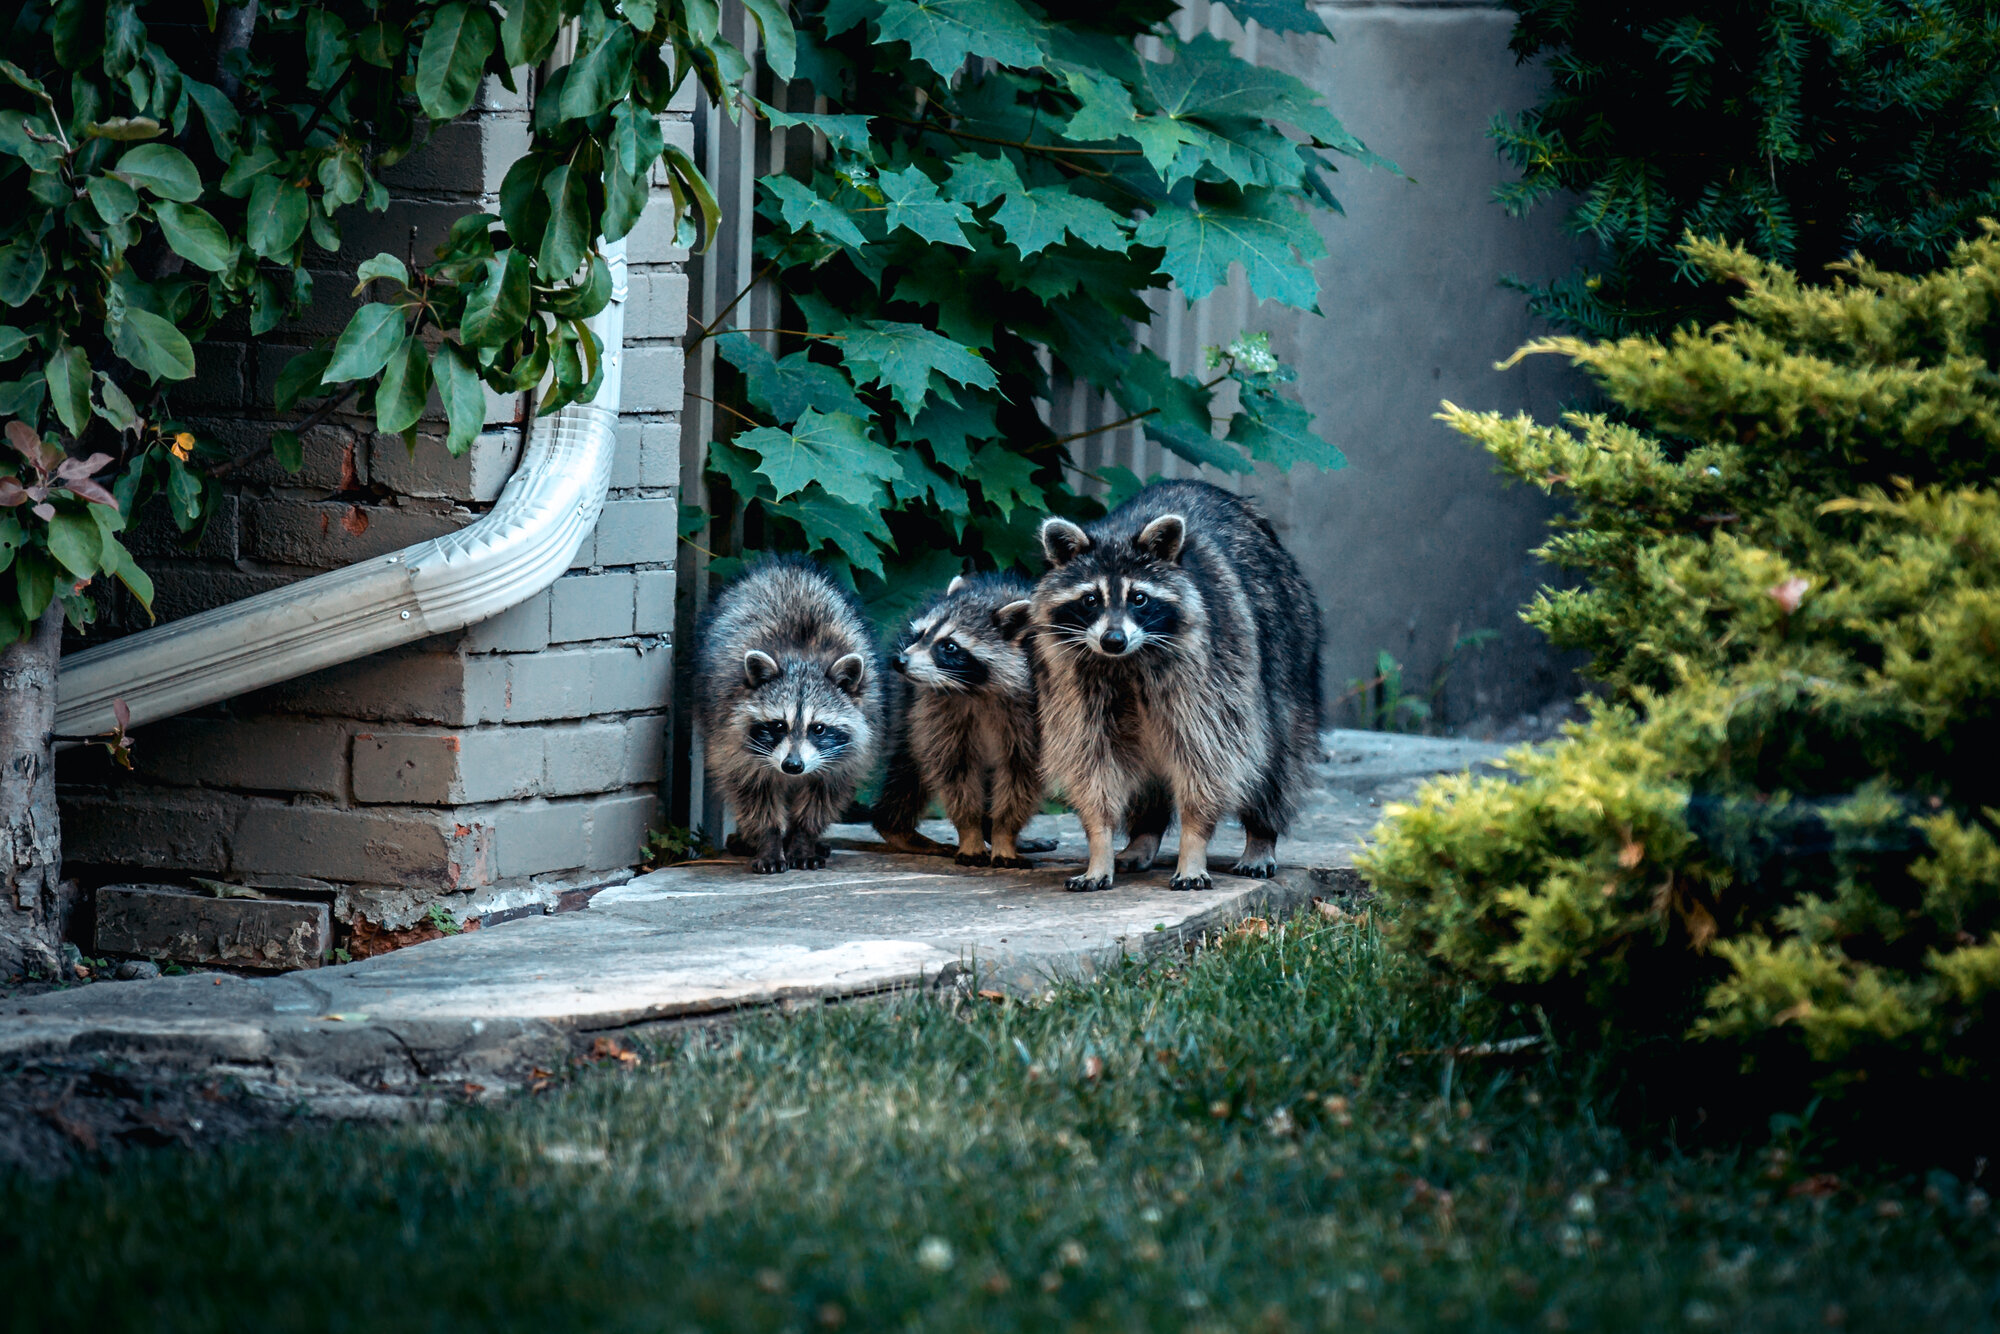 Raccoons around a house